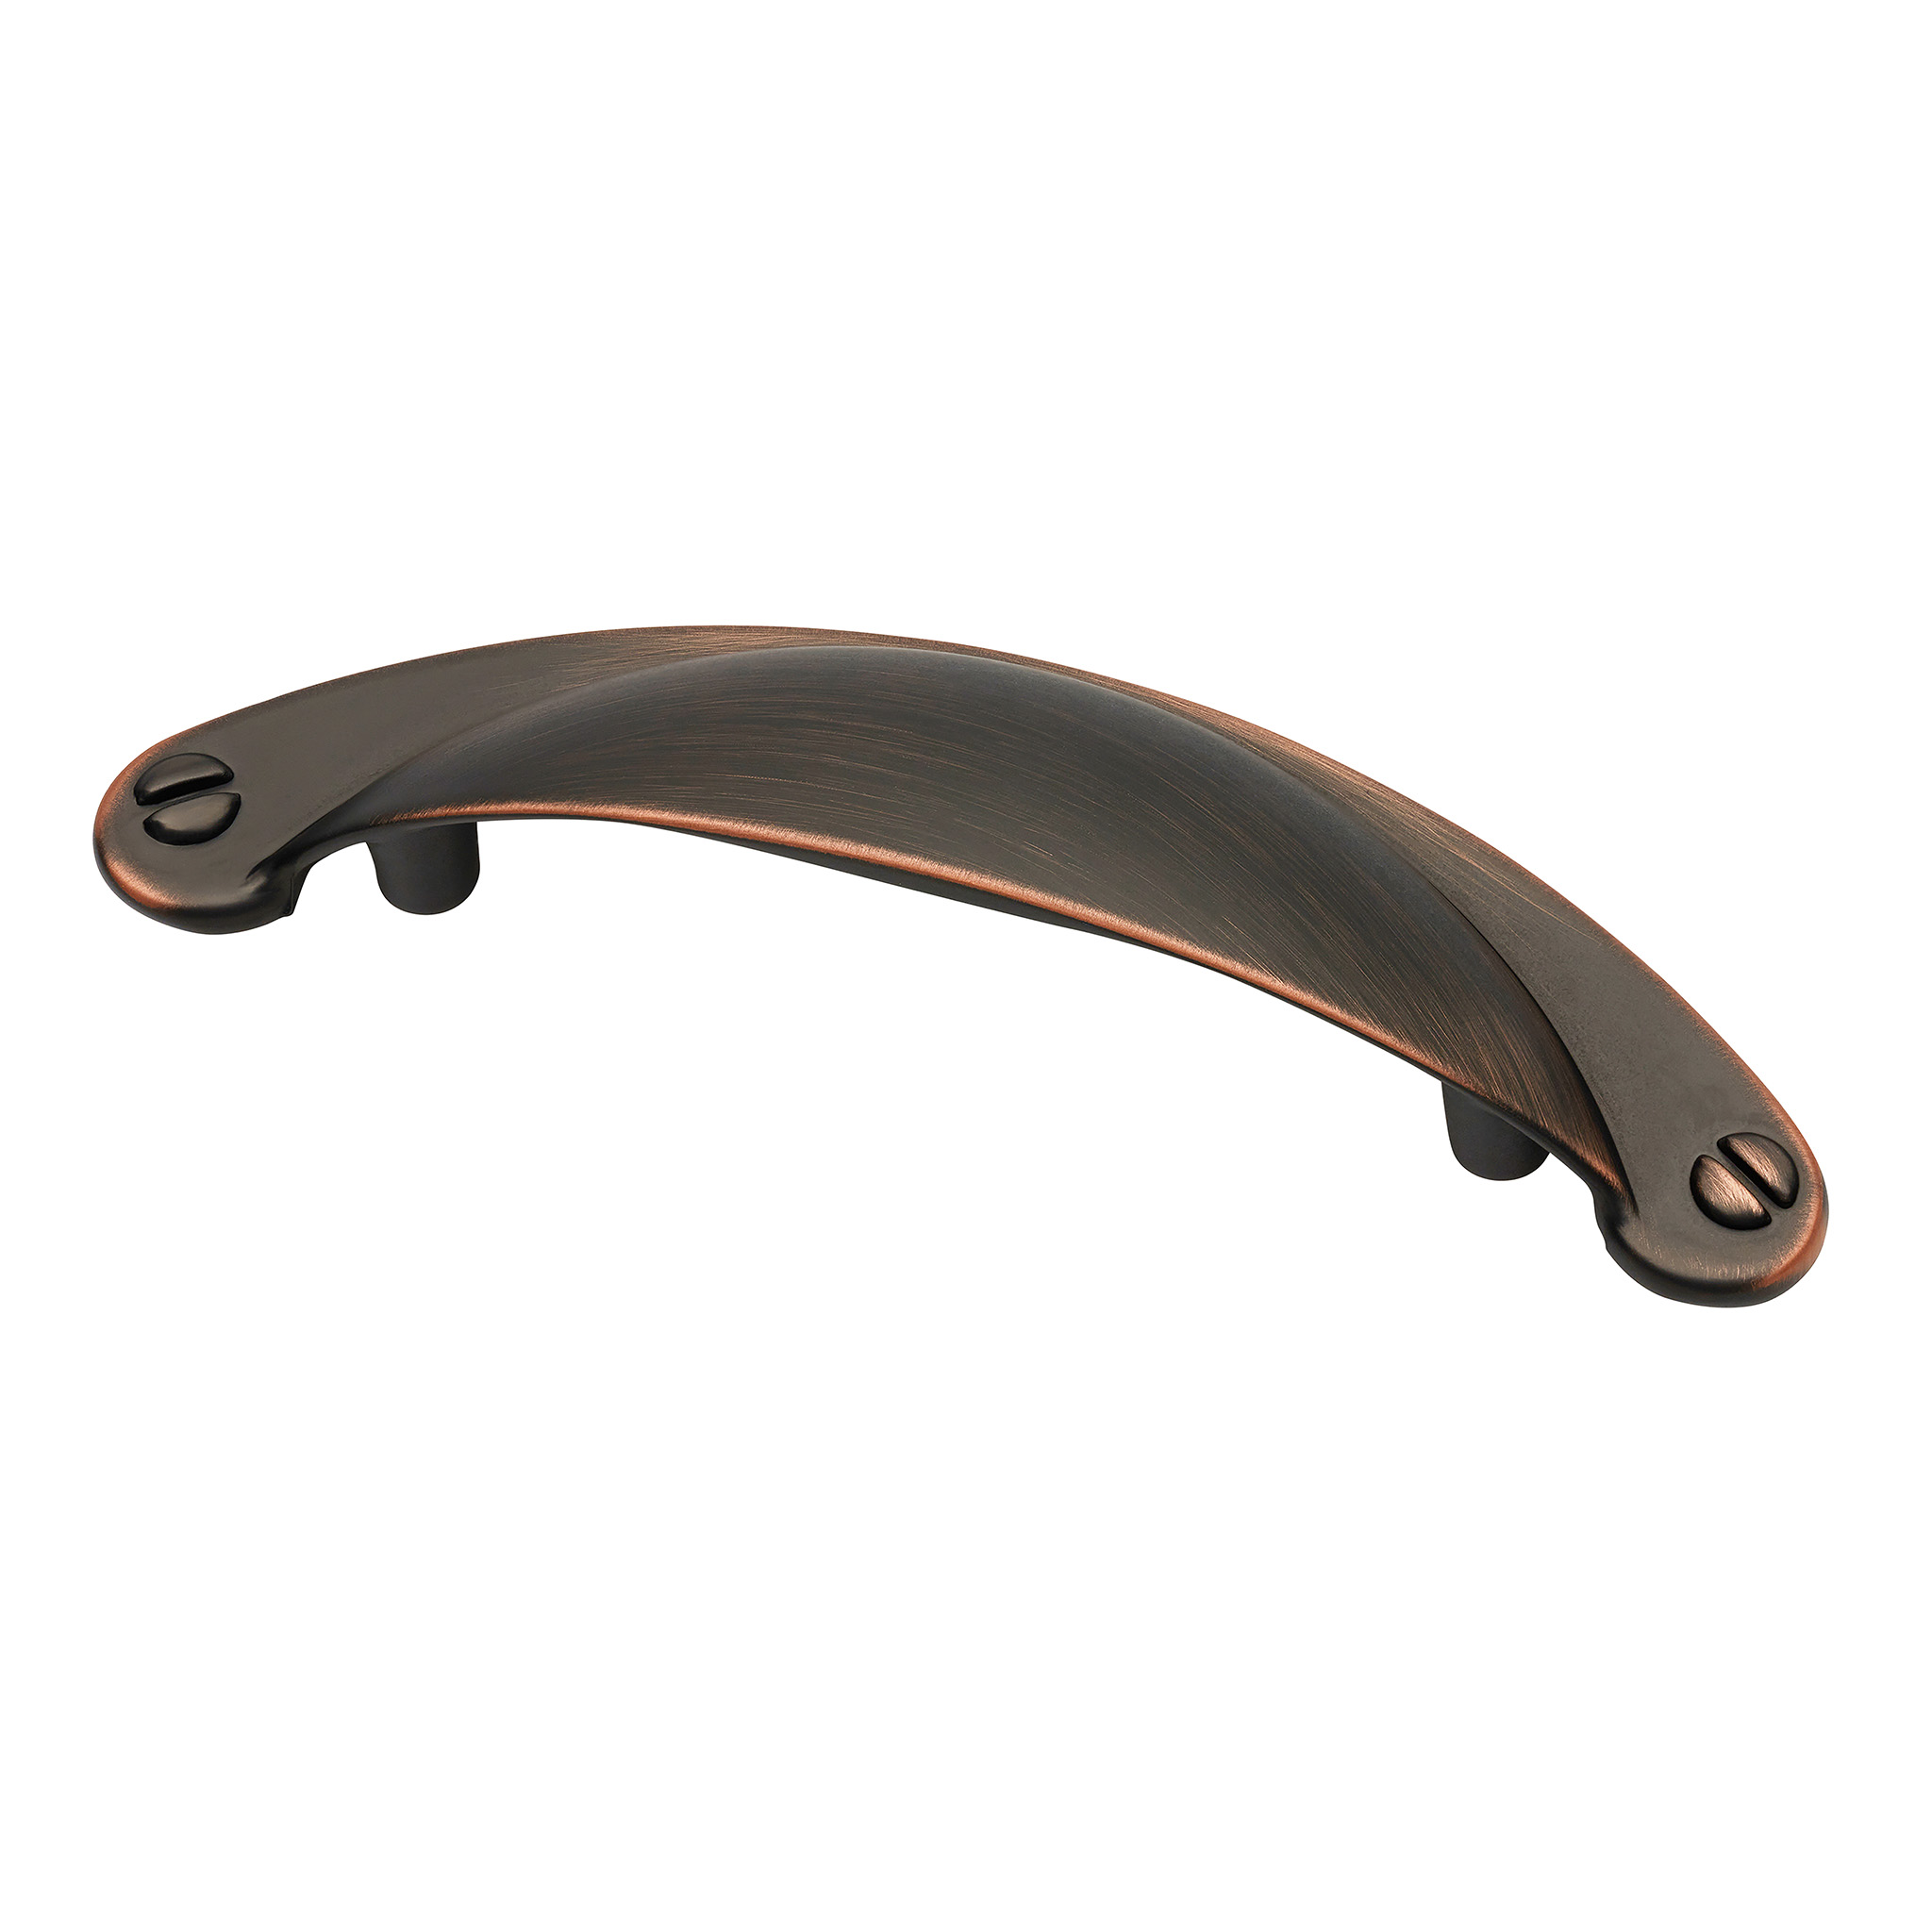 Ridgeley Classic Pull, 64mm, Antique Copper Bronze Highlight